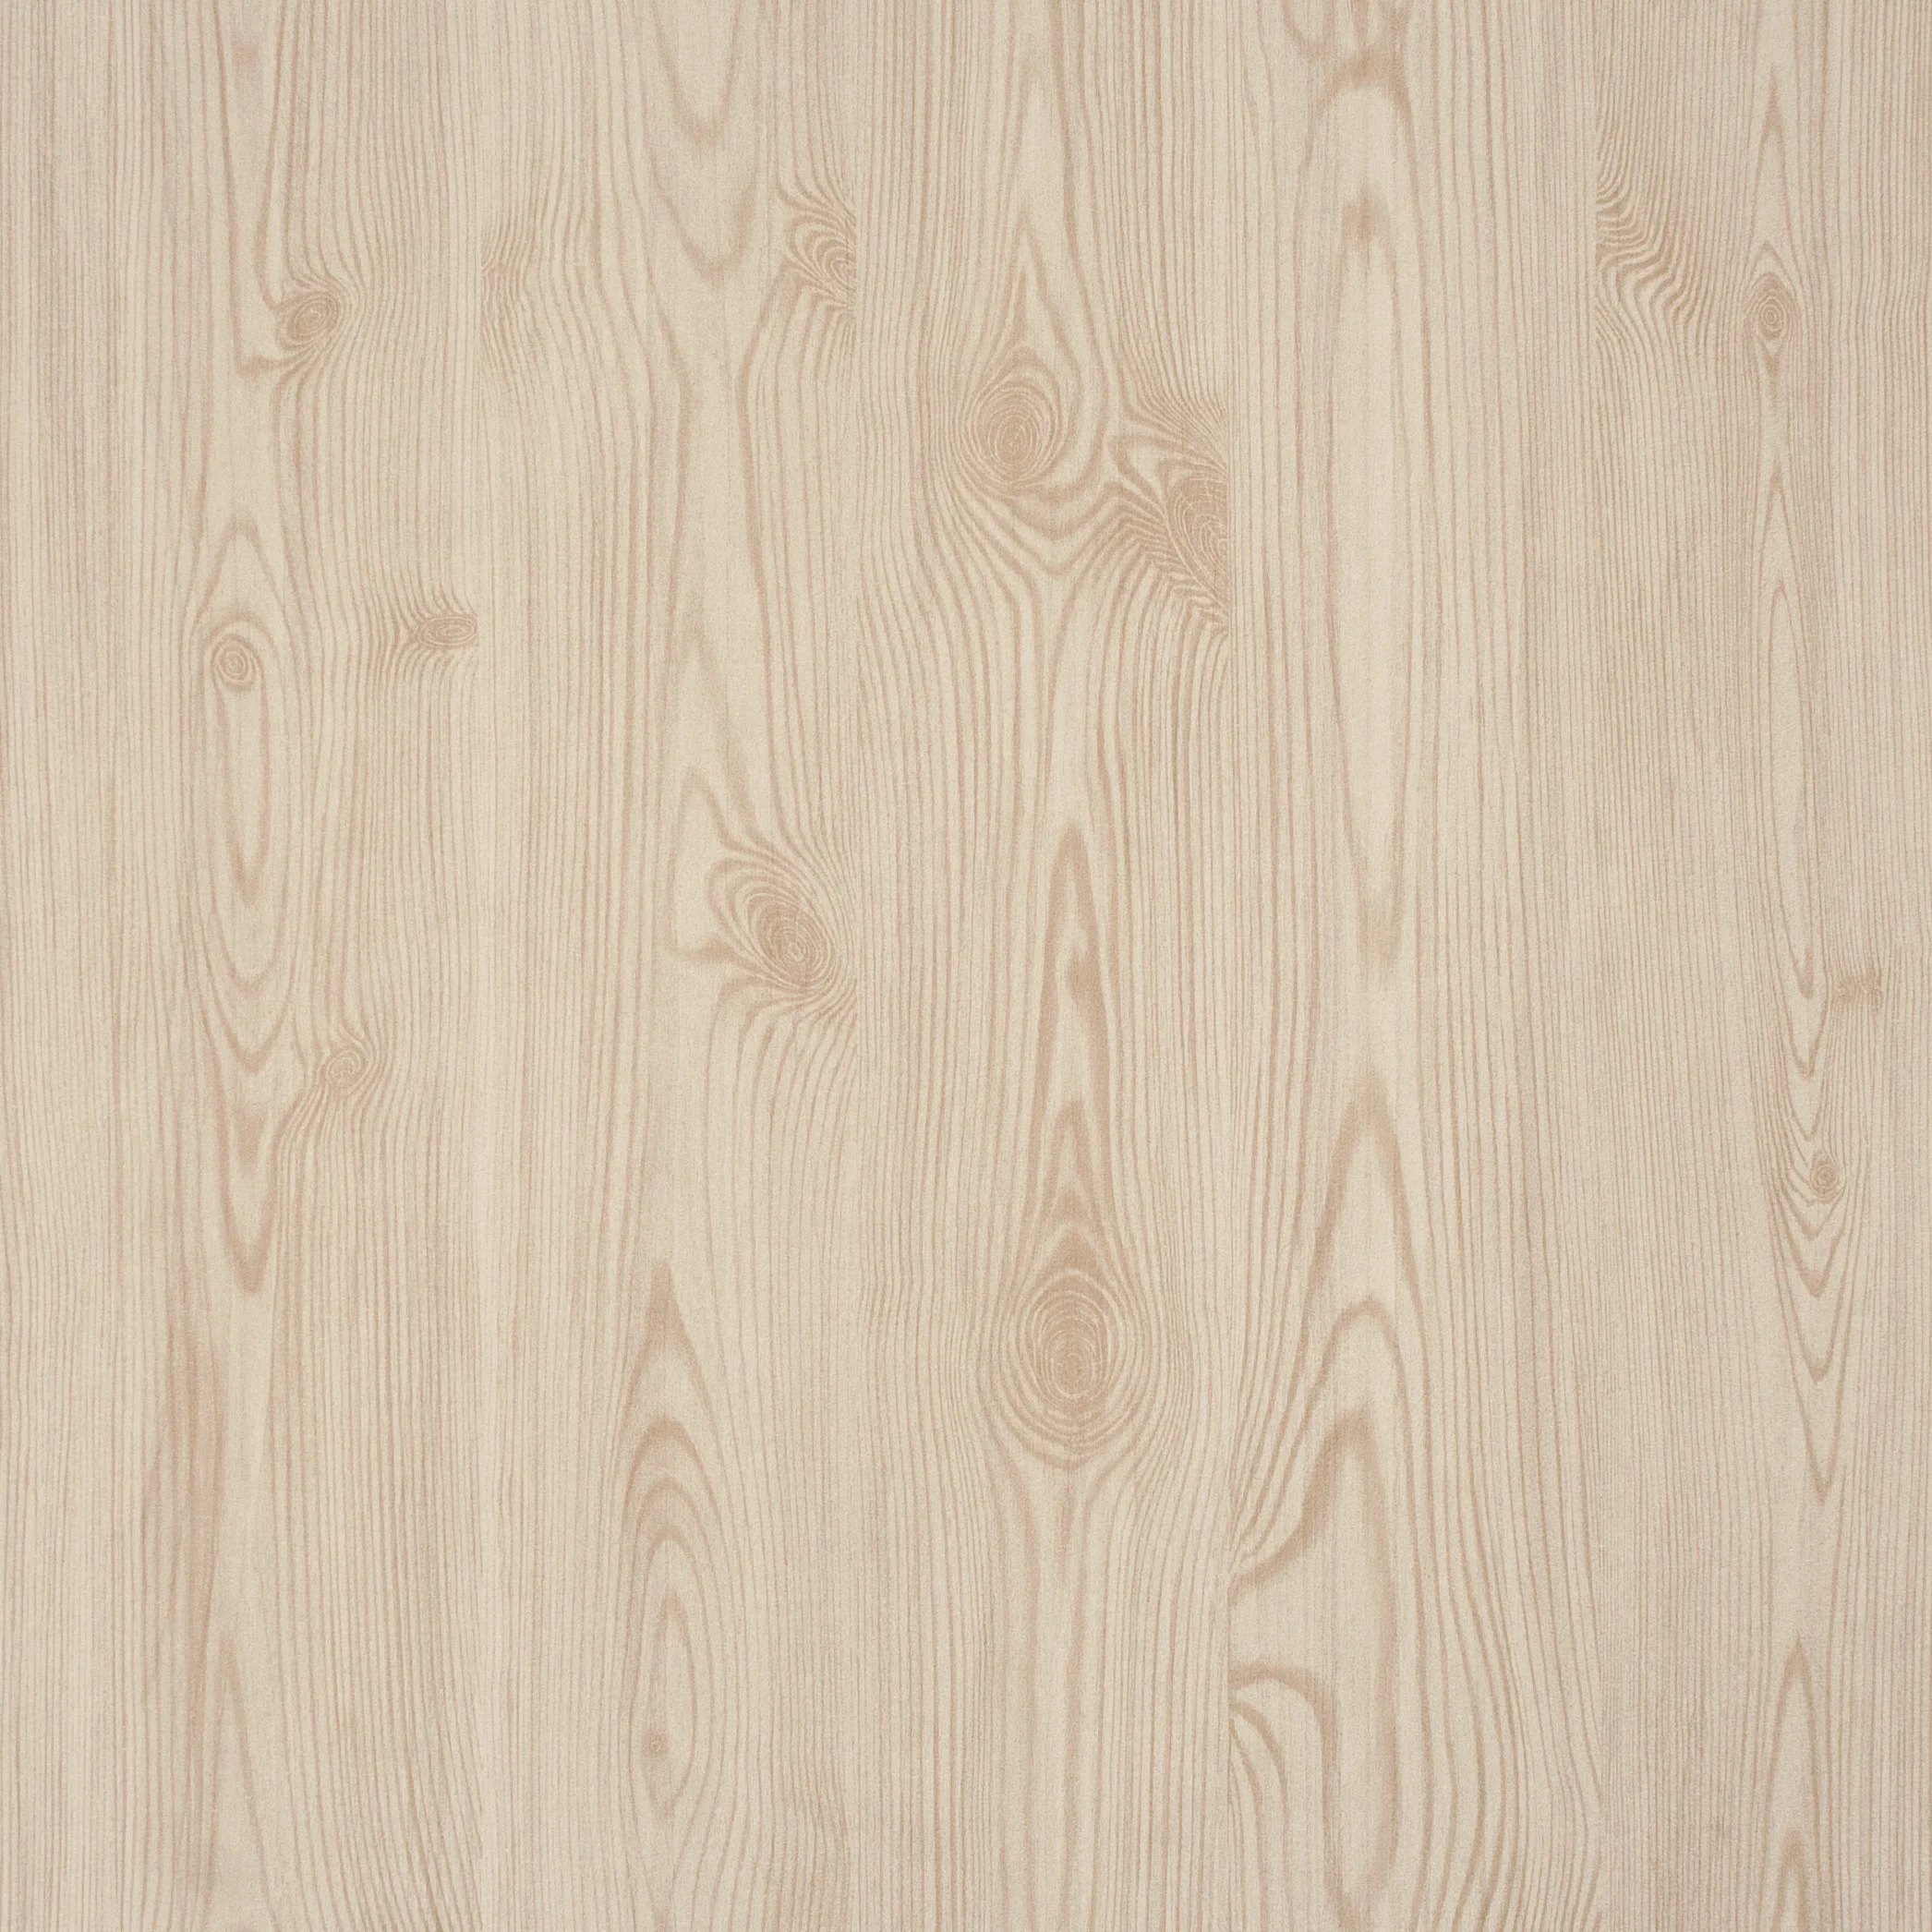 Wood Wallpaper brown / Hout Behang Bruin – Layers by Edward van Vliet 49050 – BN